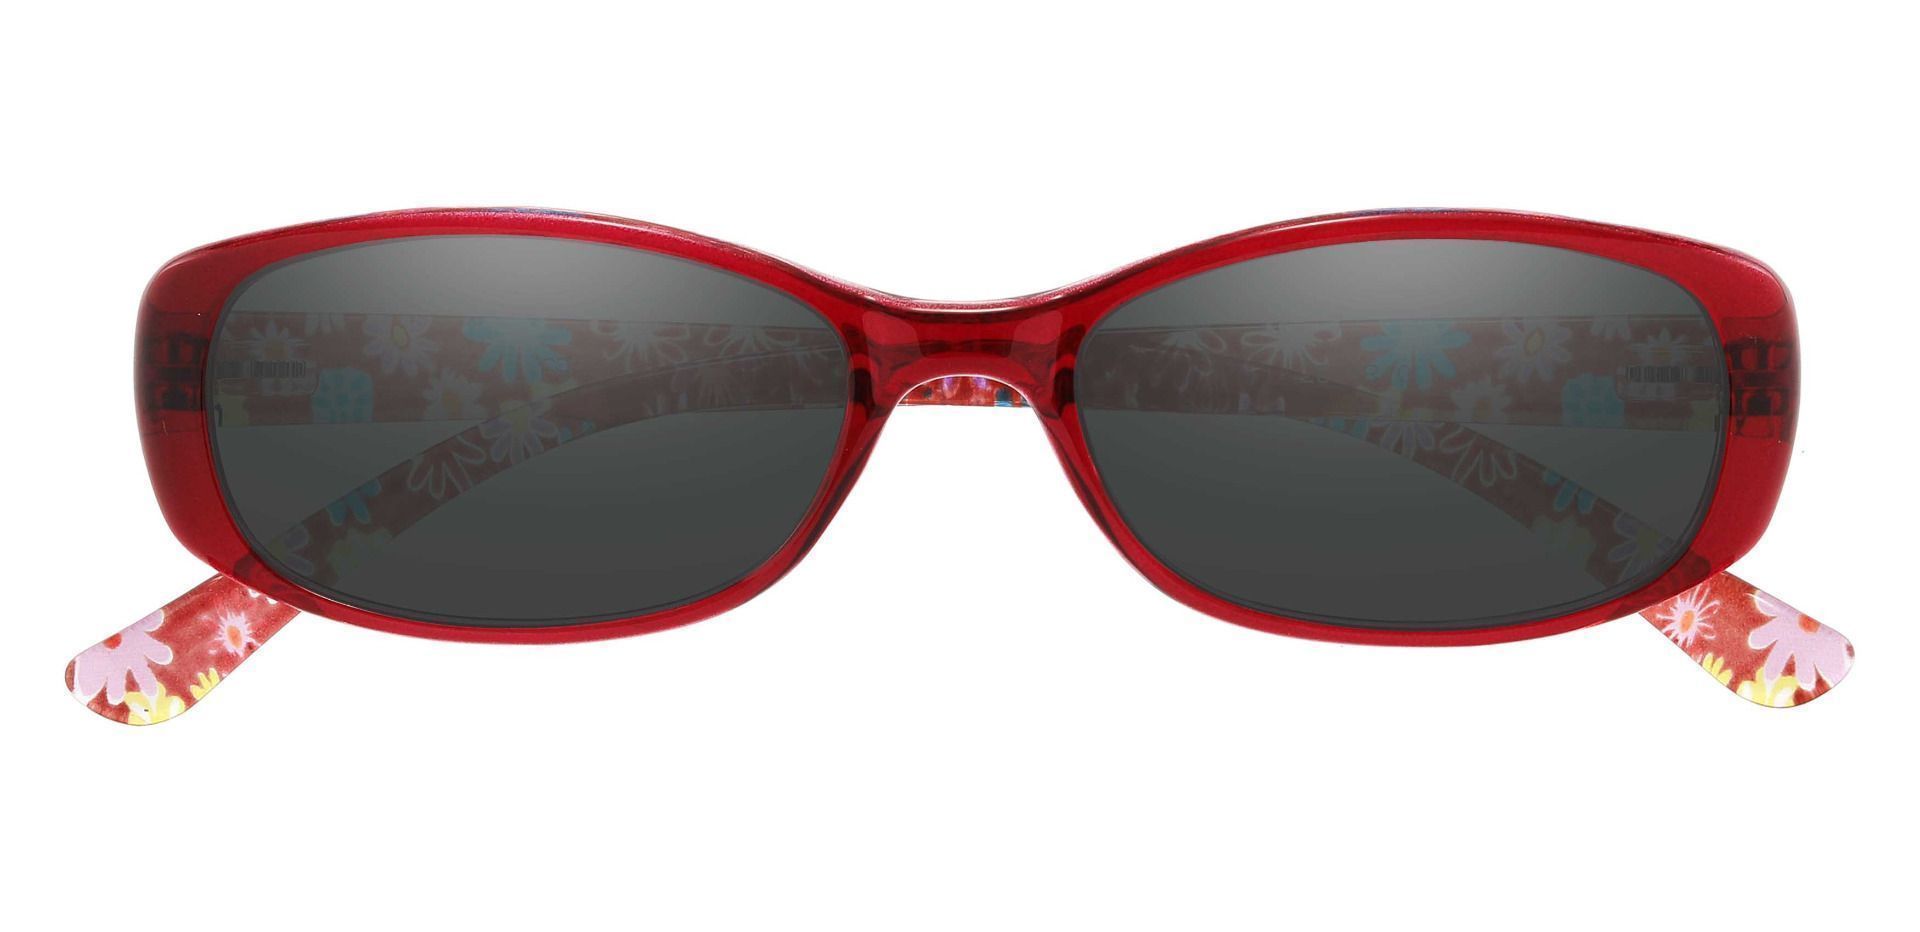 Bethesda Rectangle Progressive Sunglasses - Red Frame With Gray Lenses